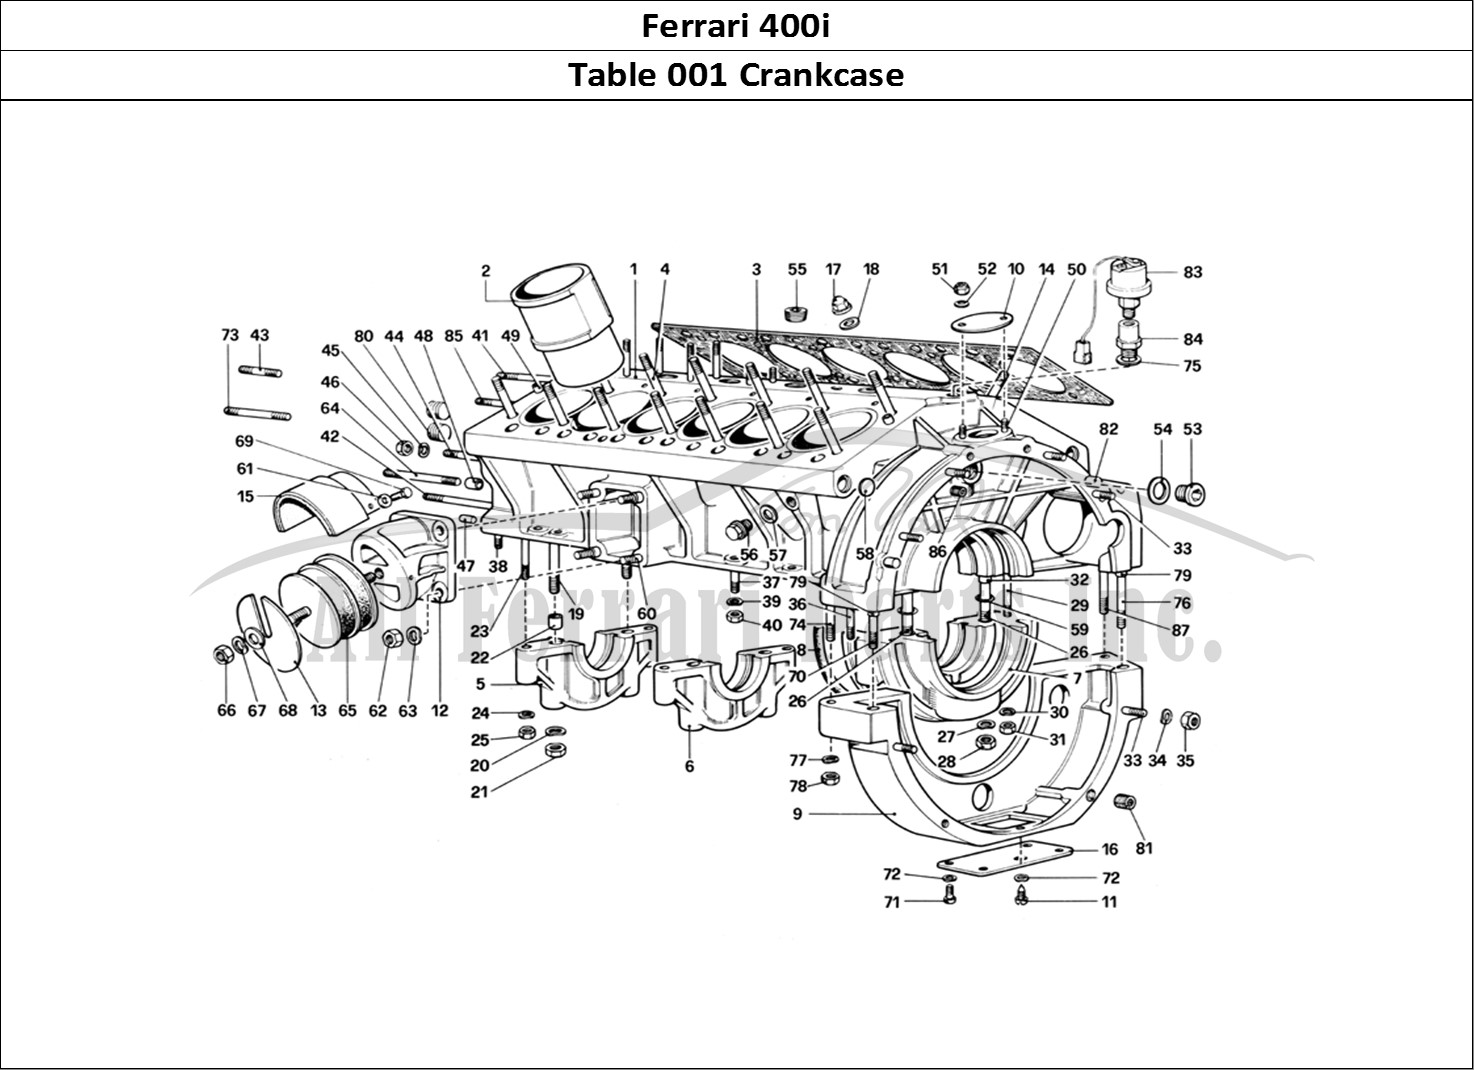 Ferrari Parts Ferrari 400i (1983 Mechanical) Page 001 Crankcase